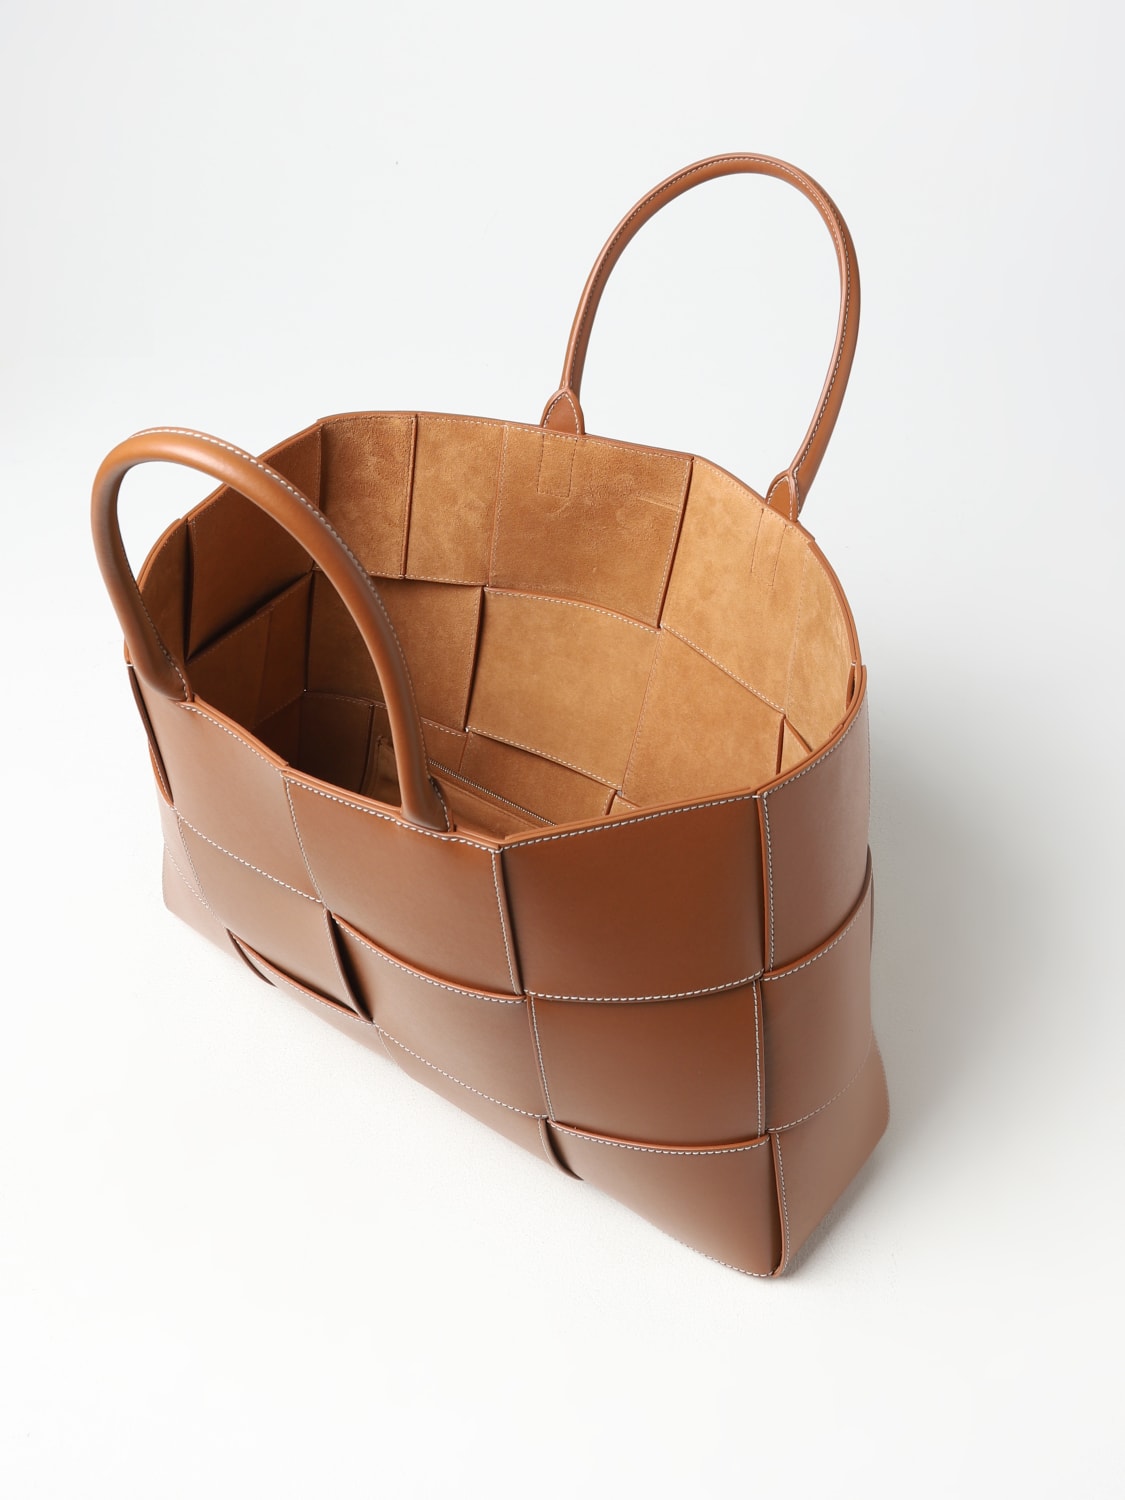 Bottega Veneta leather bag